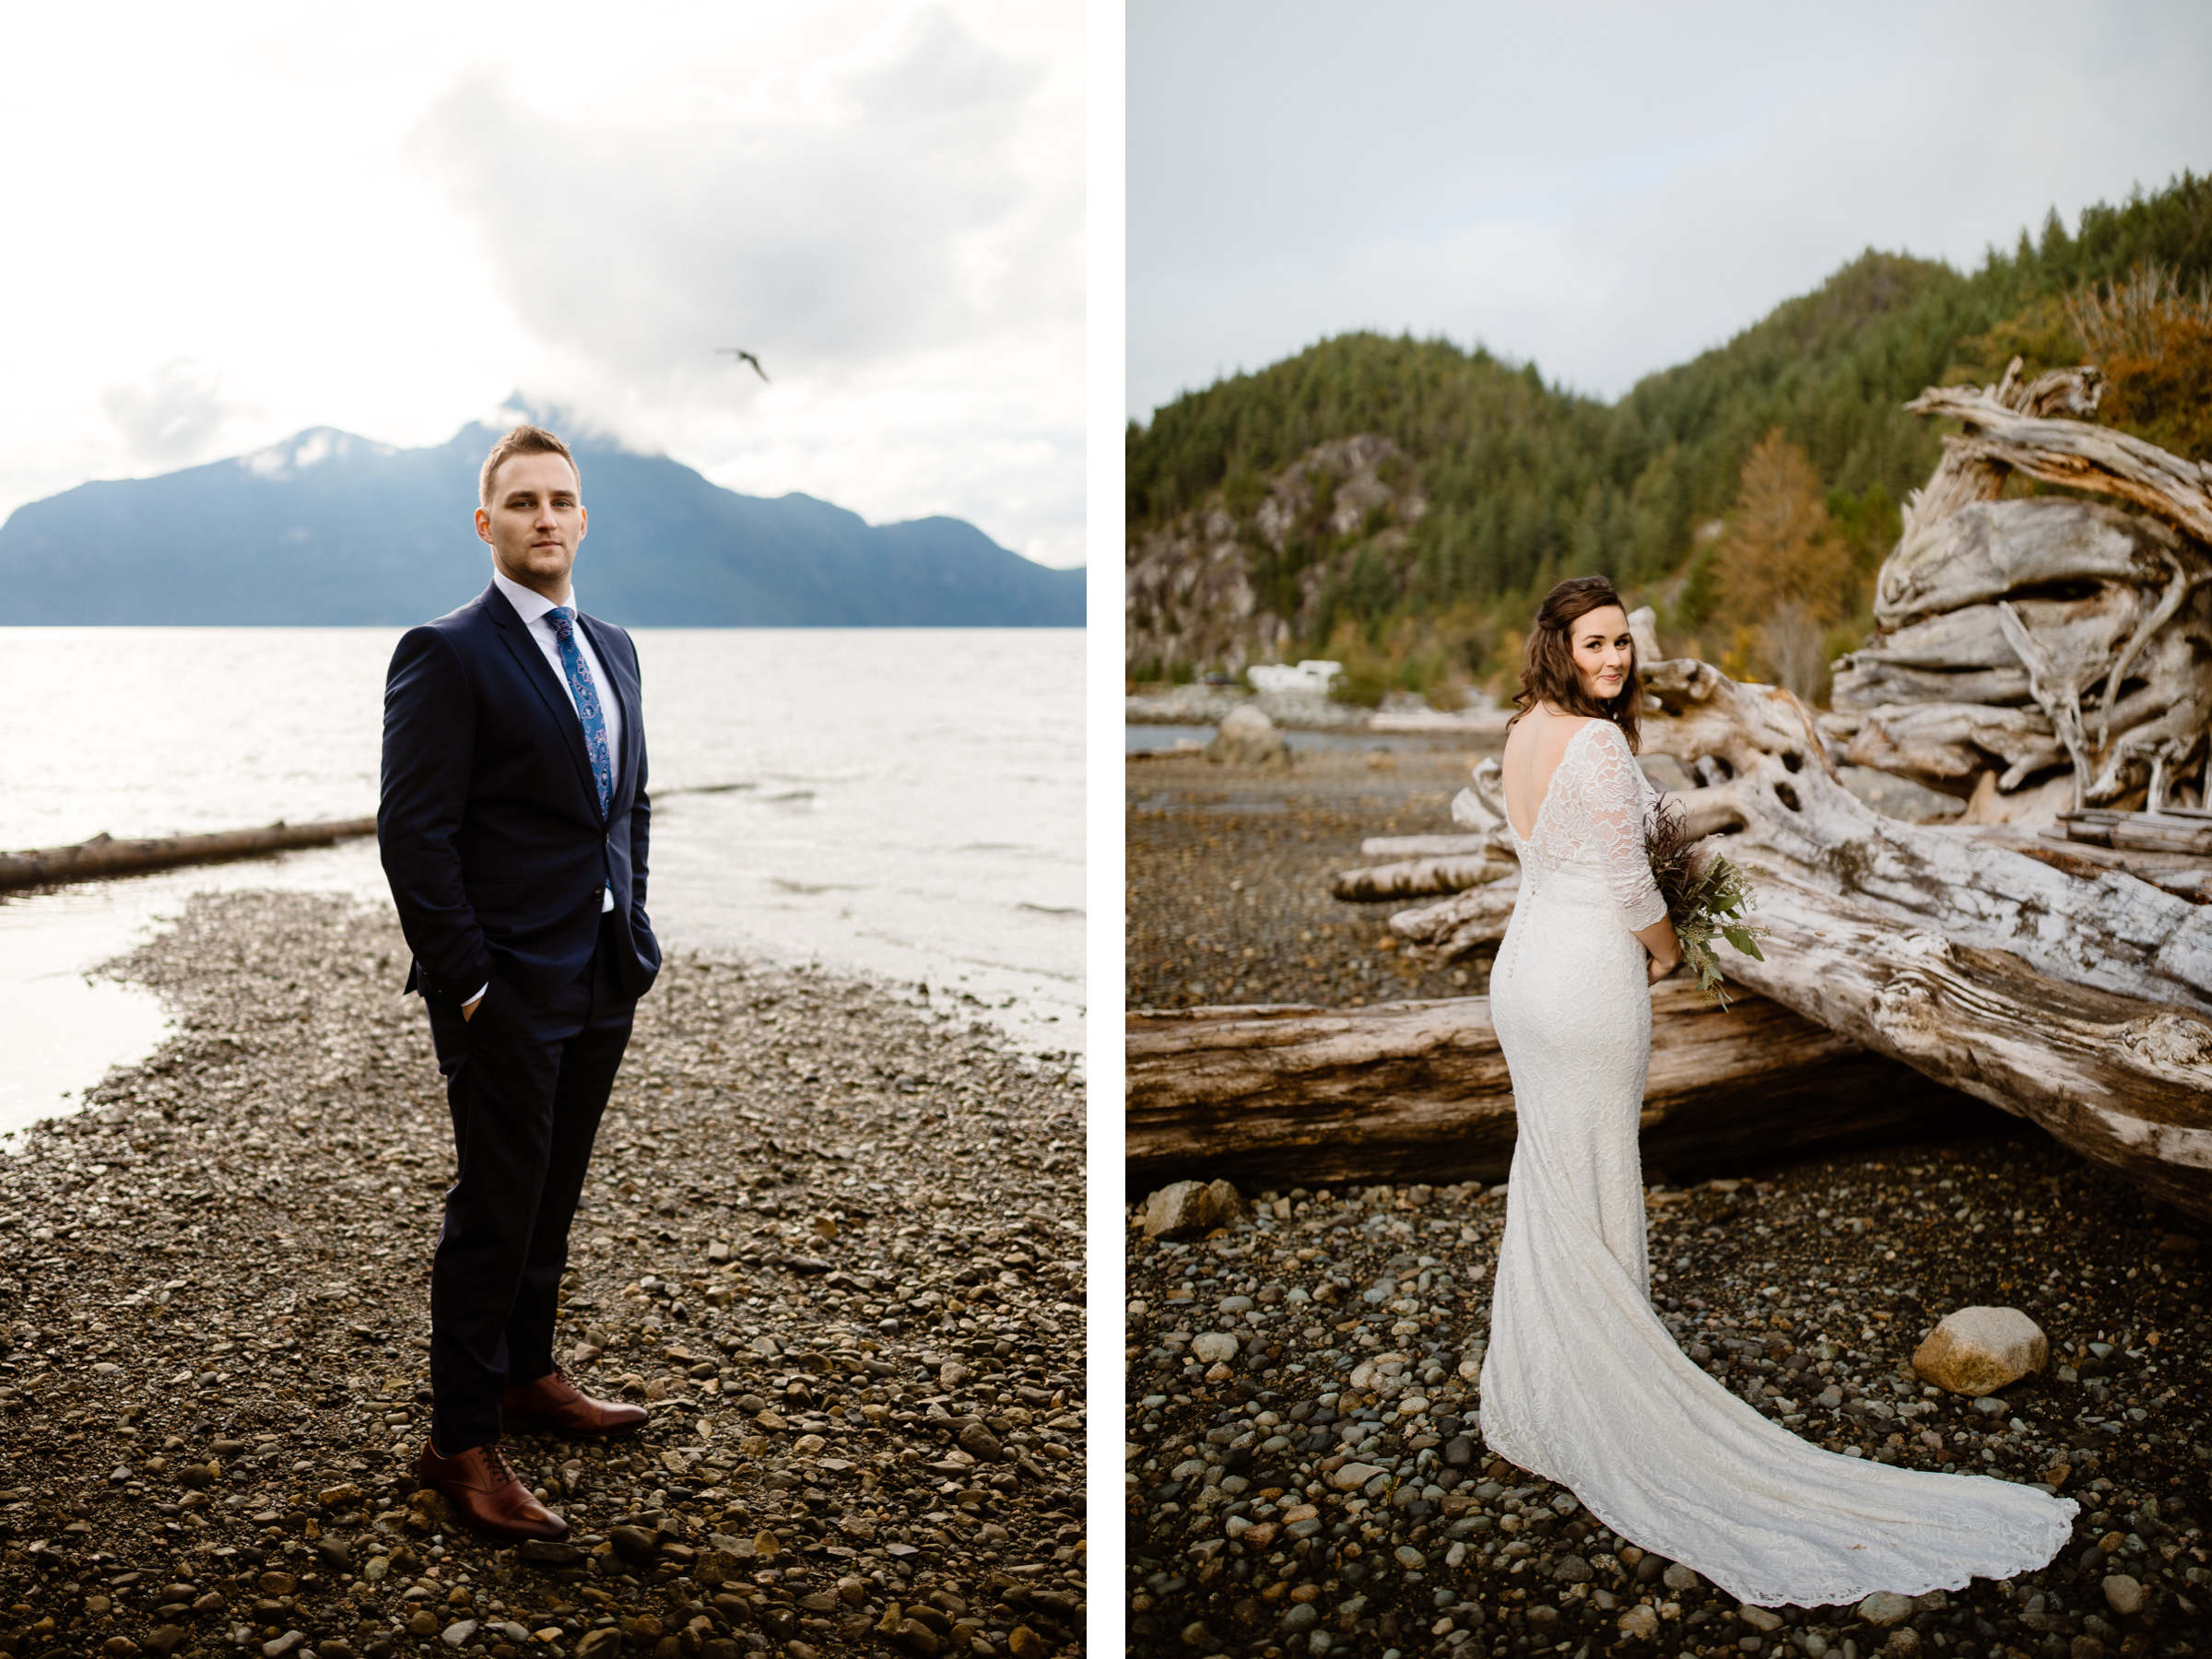 Squamish Wedding Photographers at an Adventurous Elopement - Image 21